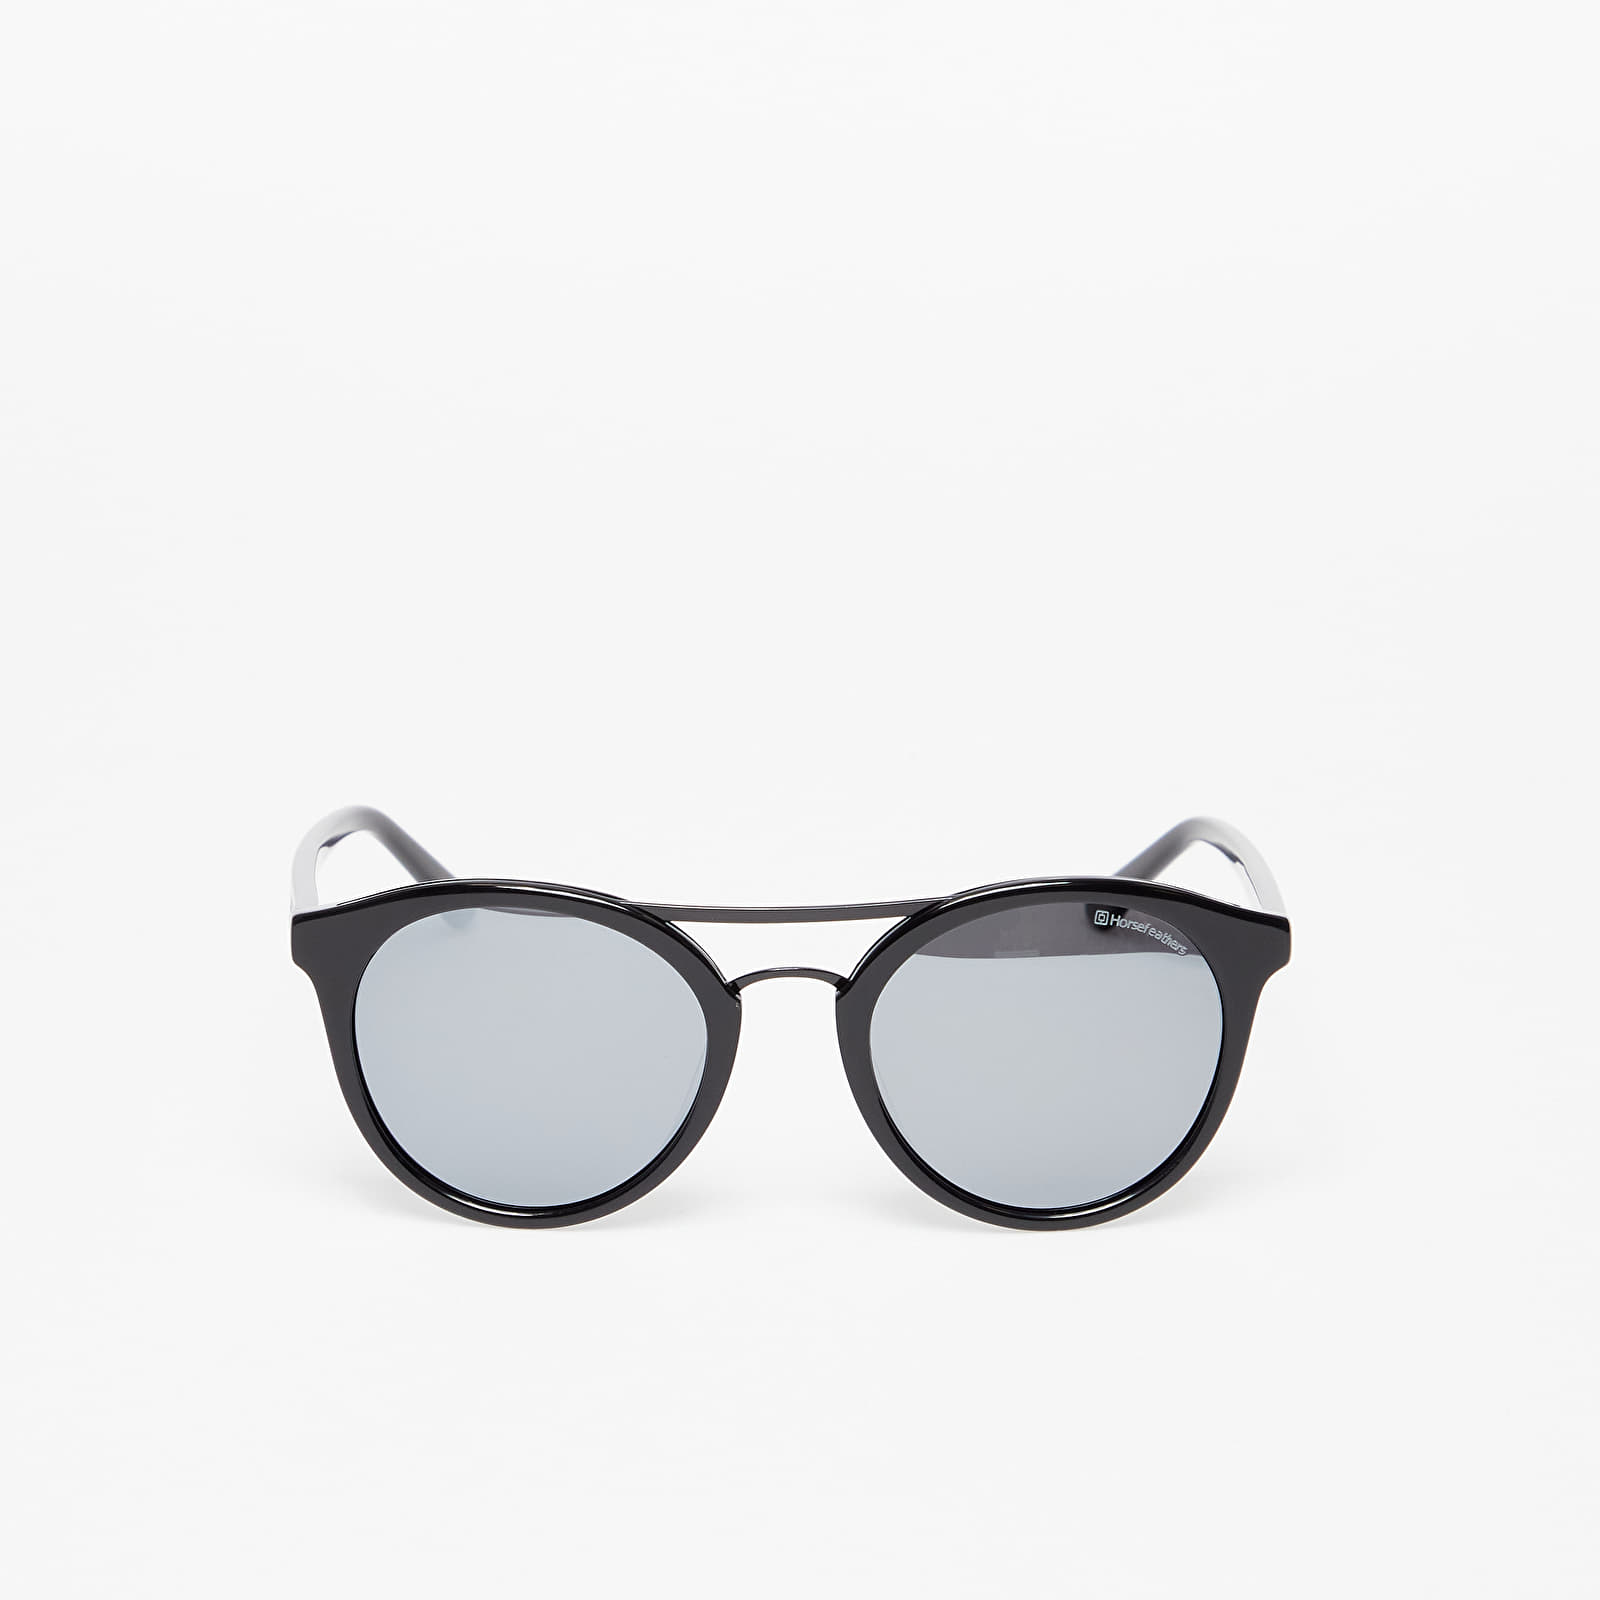 Sunglasses Horsefeathers Nomad Sunglasses Gloss Black/Mirror White